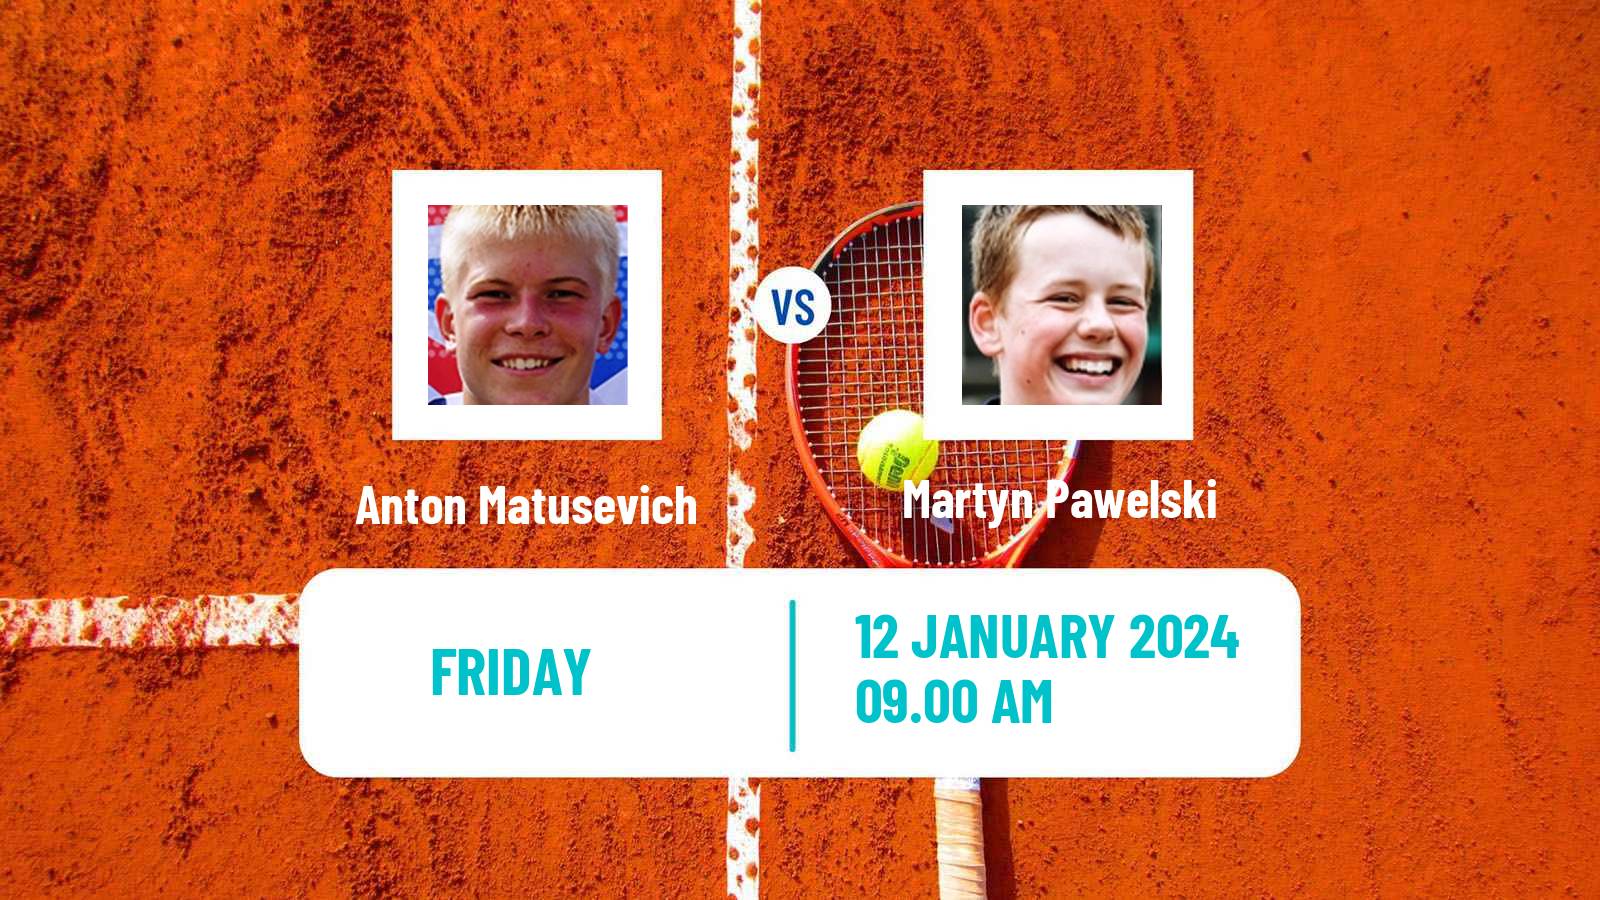 Tennis ITF M25 Loughborough Men Anton Matusevich - Martyn Pawelski